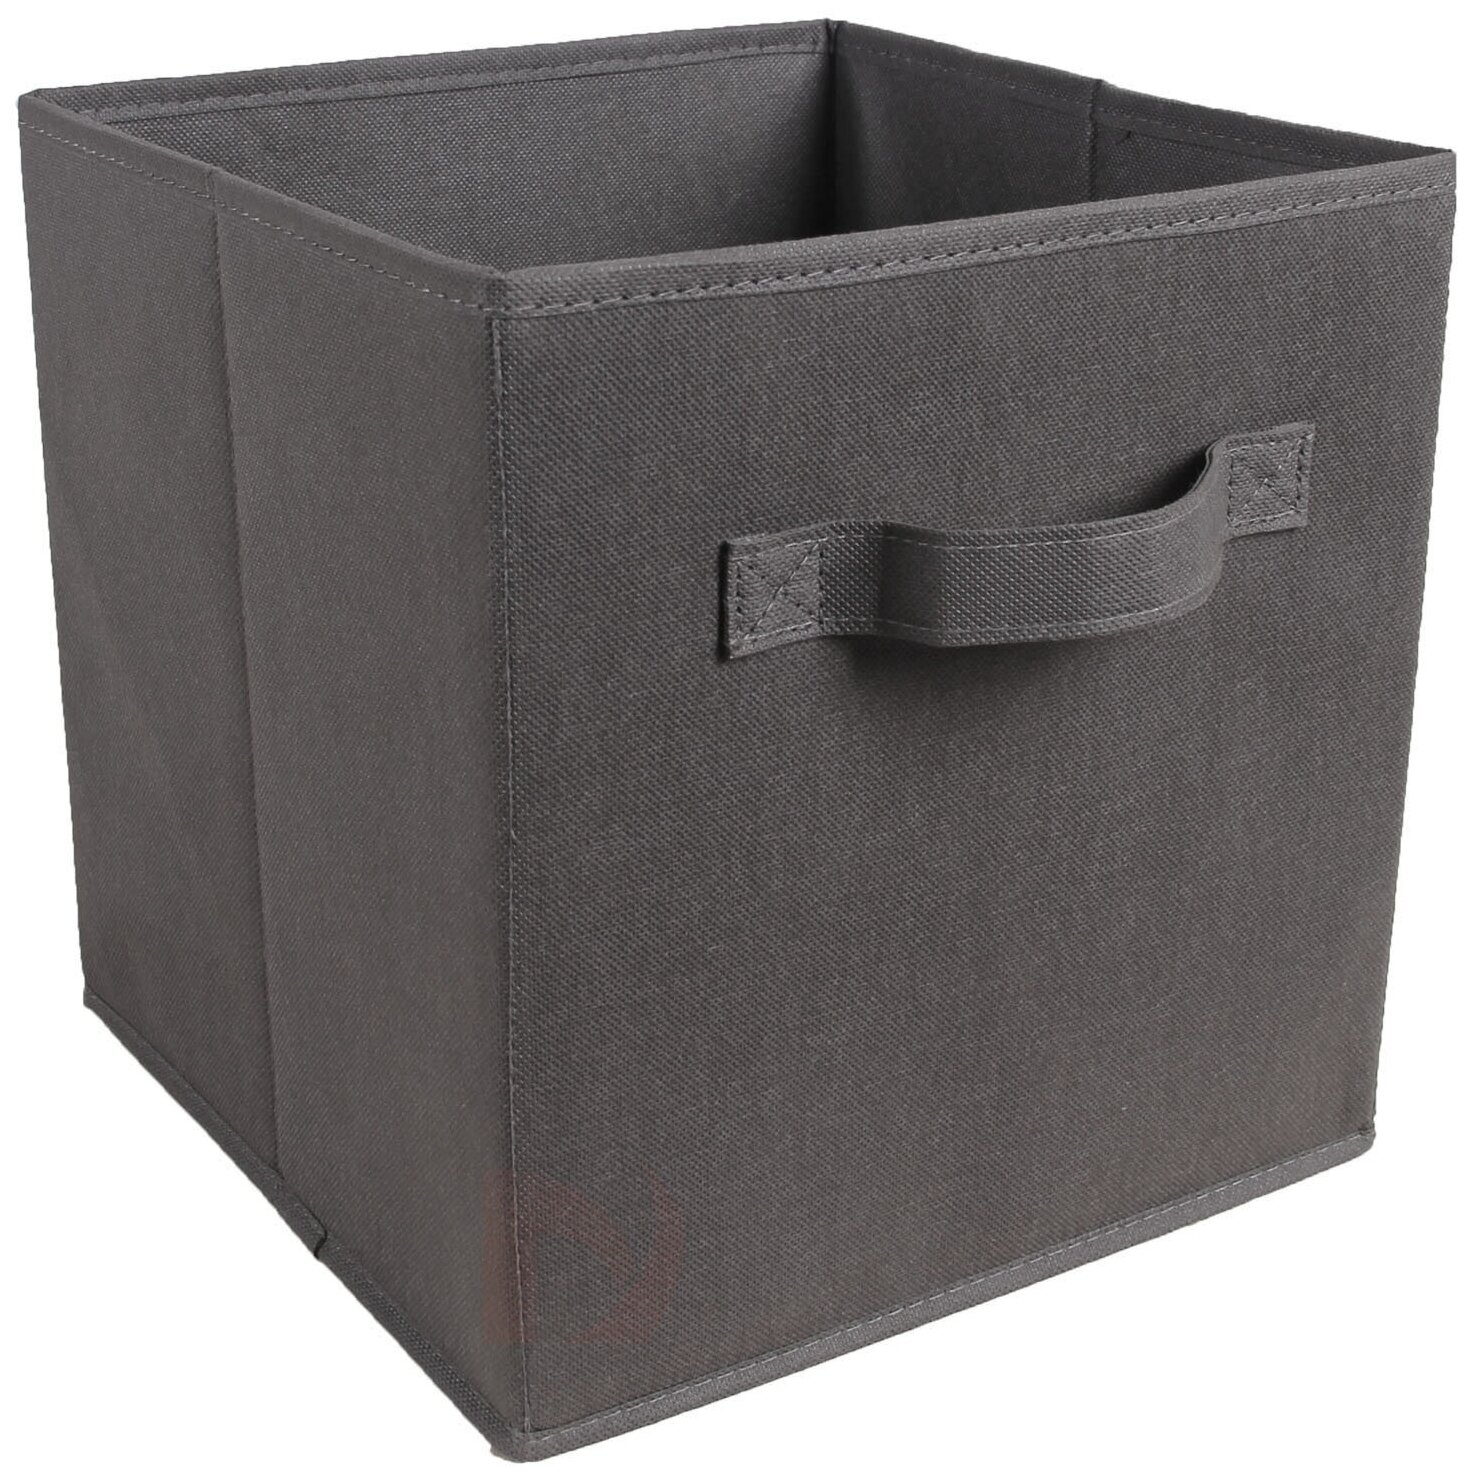 Коробка складная для хранения, 27х27х28 см, органайзер для хранения, кофр для хранения вещей, цвет темно-серый